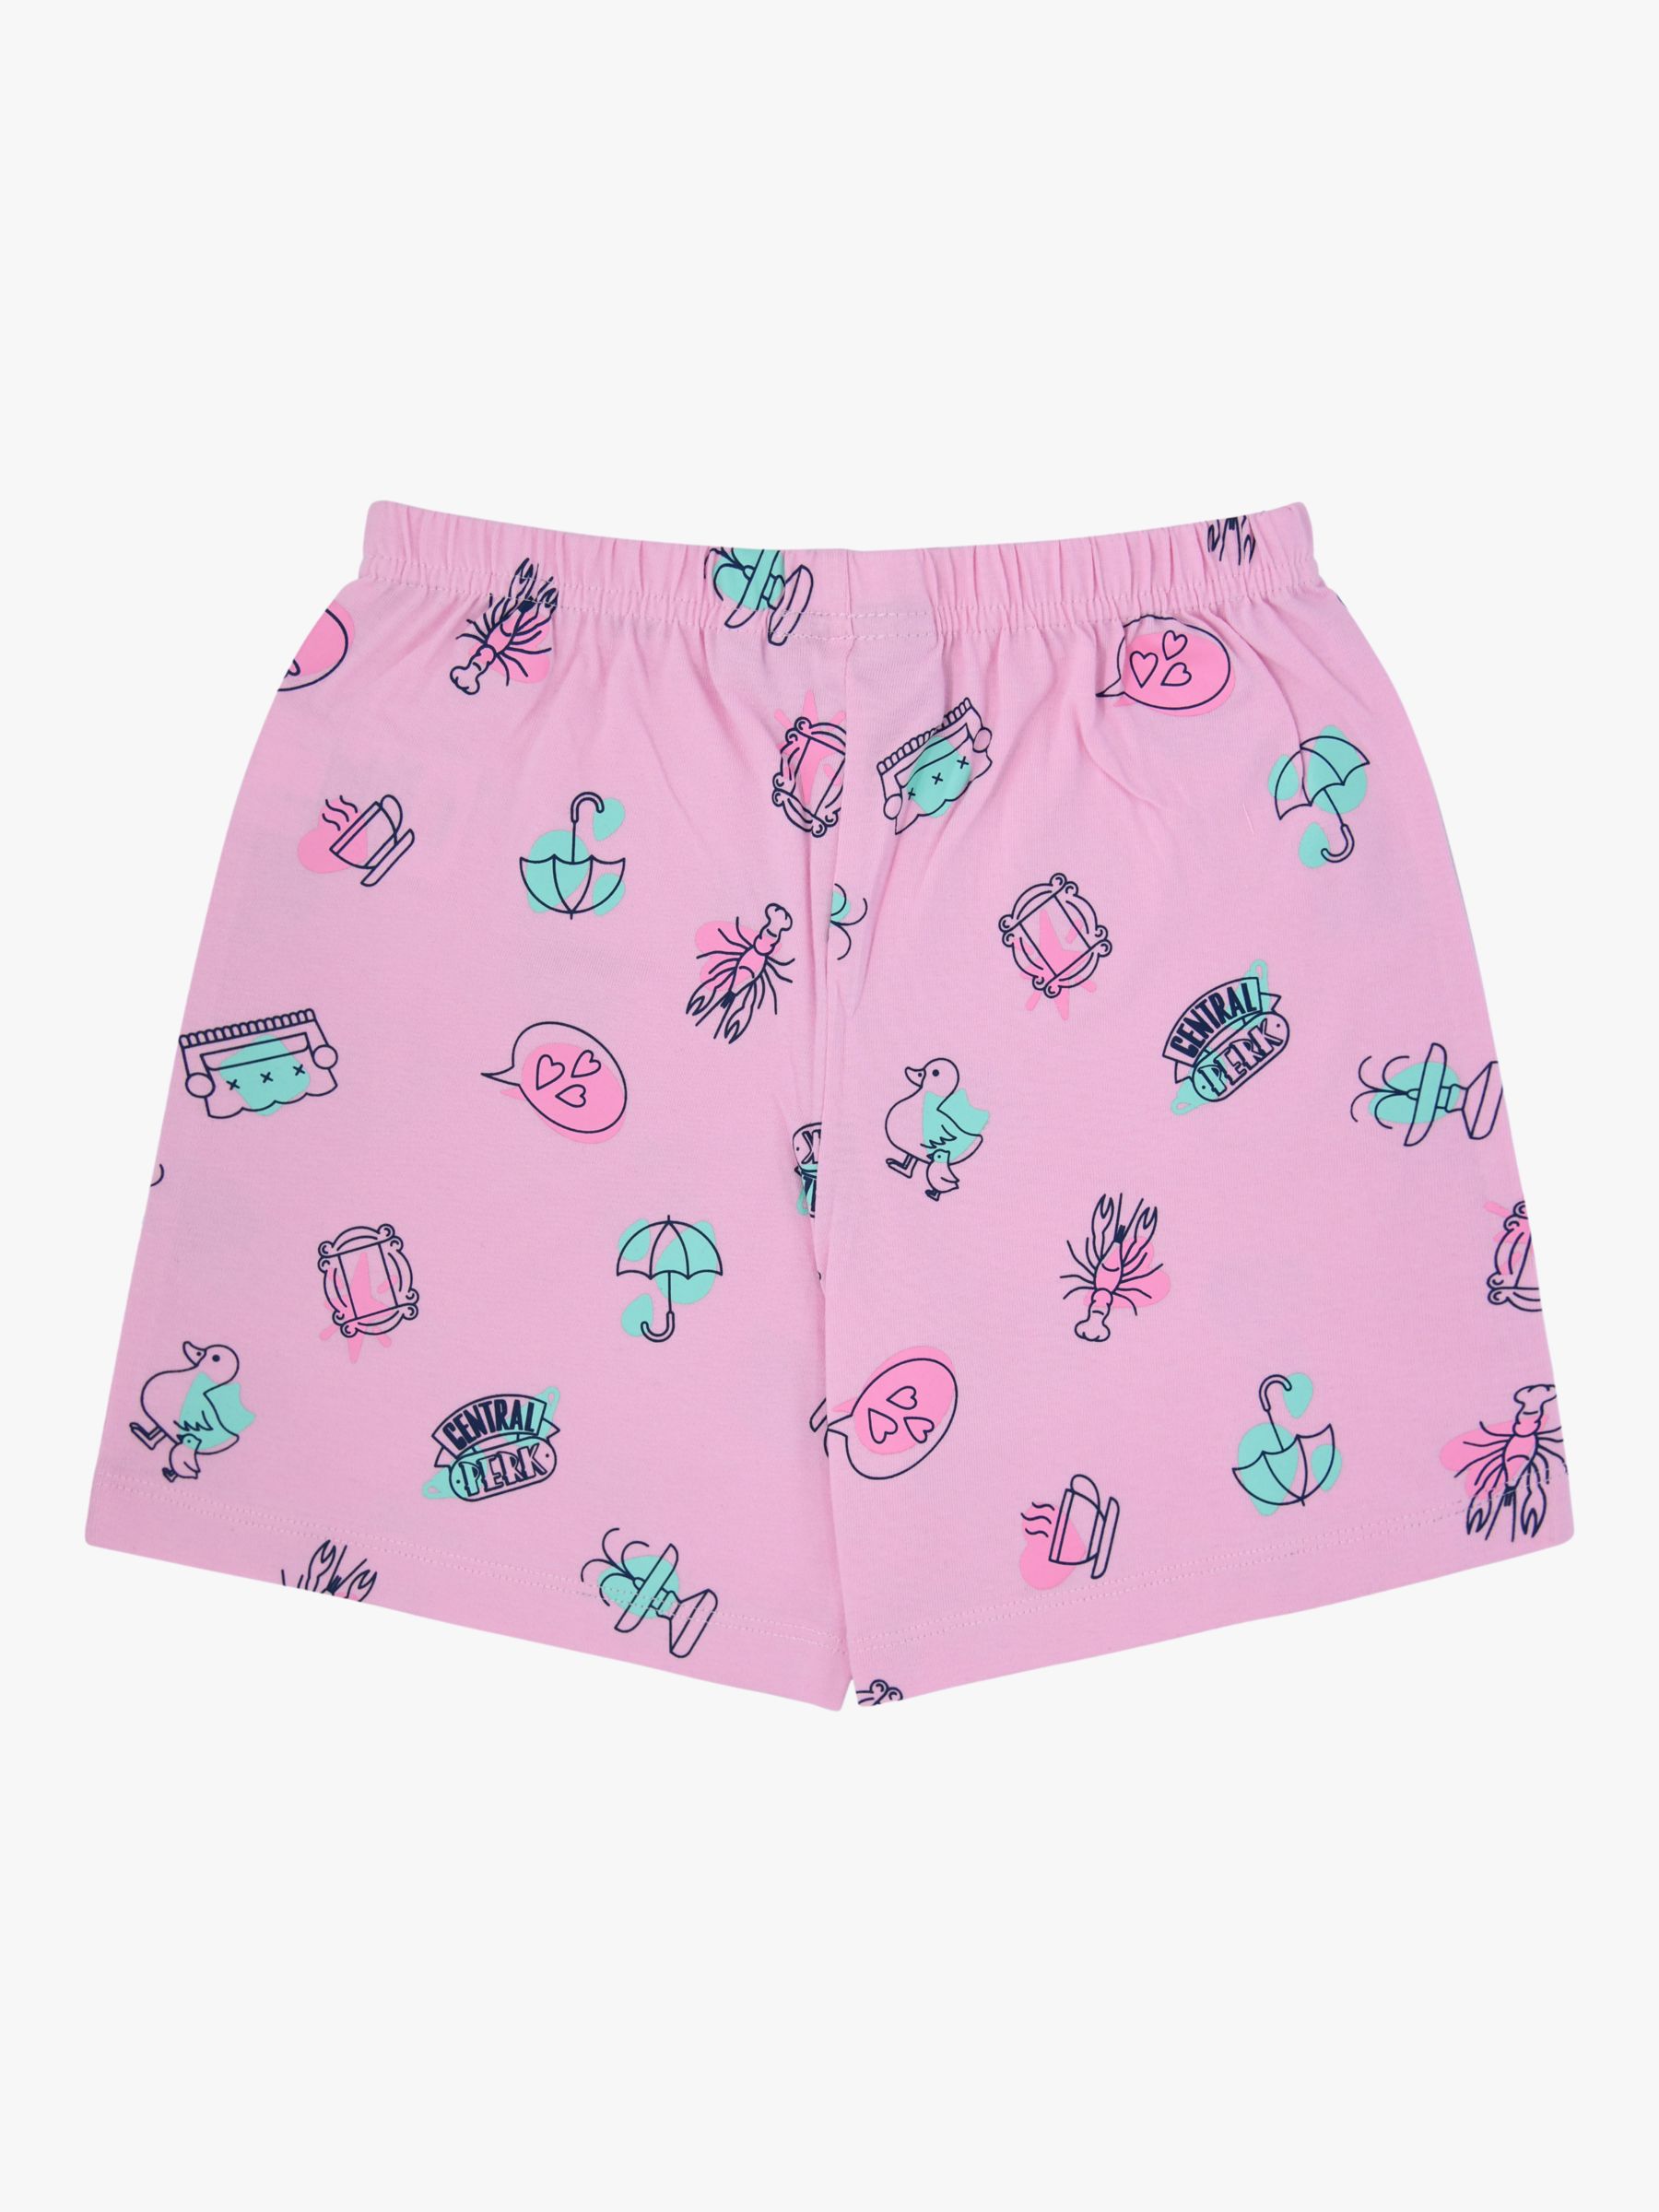 Fabric Flavours Kids' Friends Shortie Pyjamas, Lilac/Pink at John Lewis ...